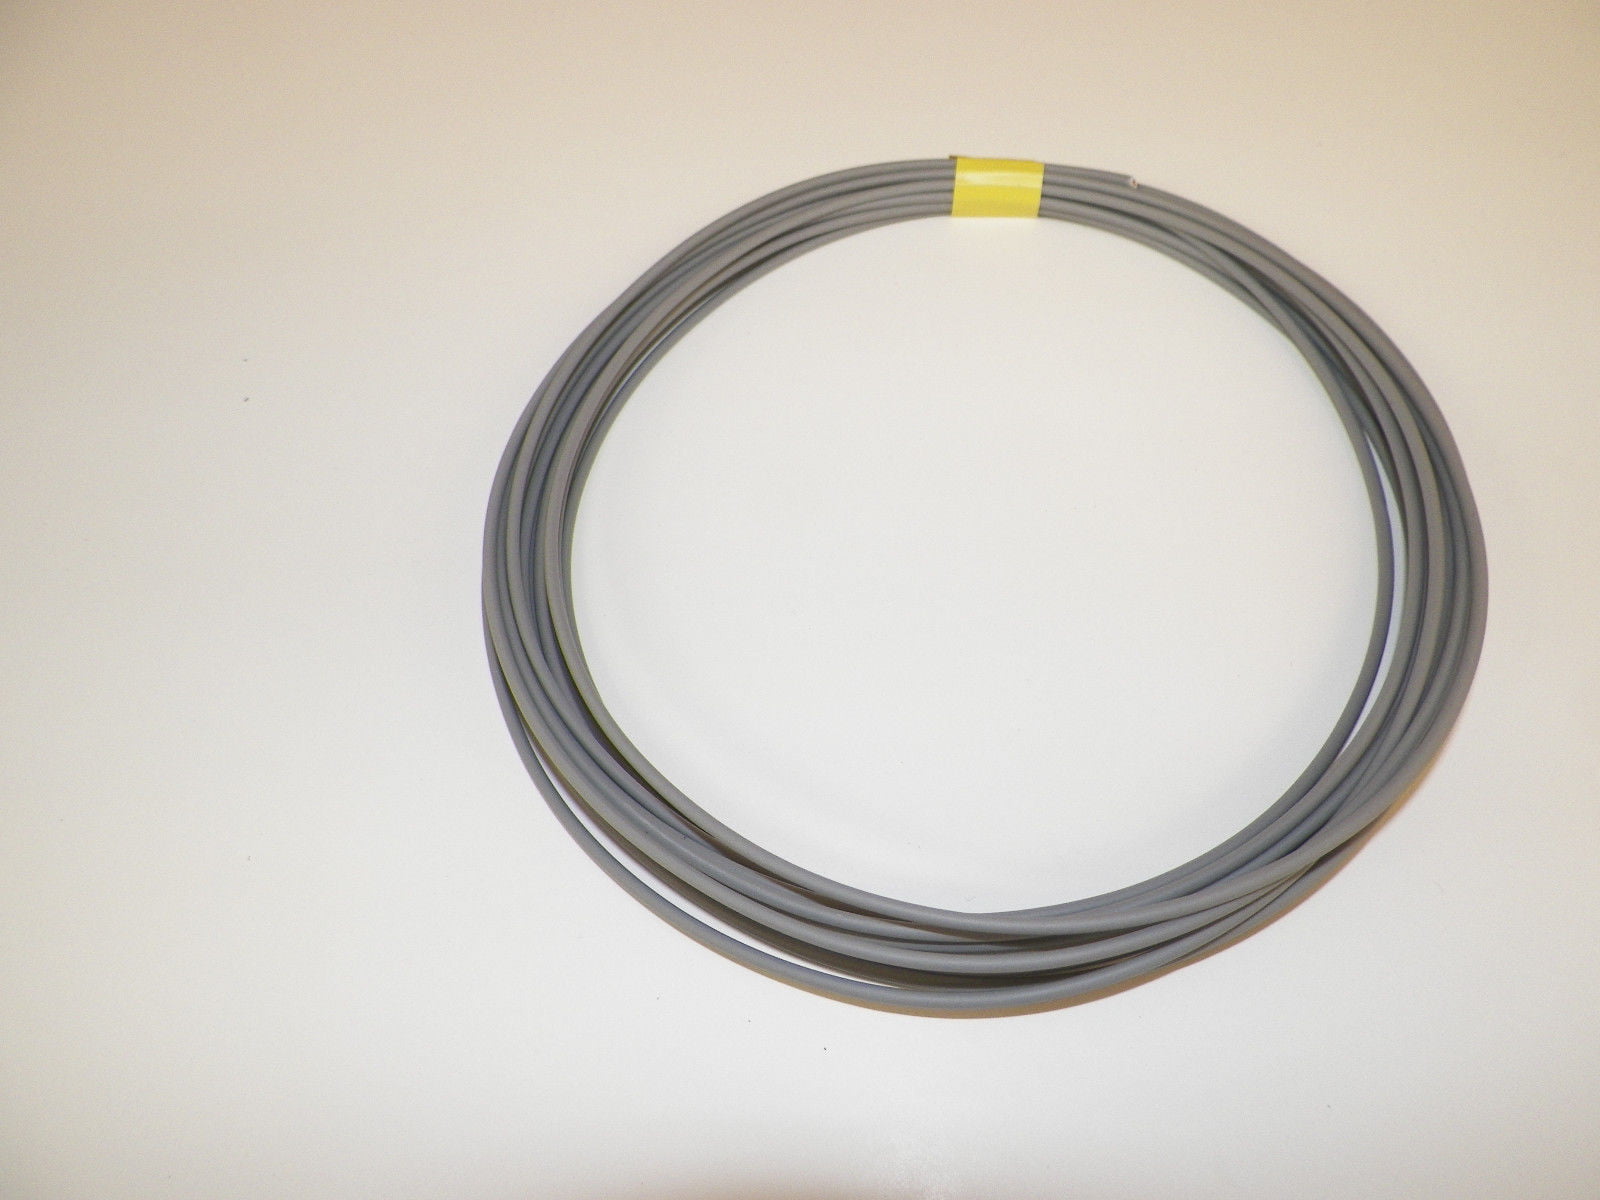 GXL ORANGE Abrasion-Resistant General Purpose Wire - 16 Ga 50 feet coil 